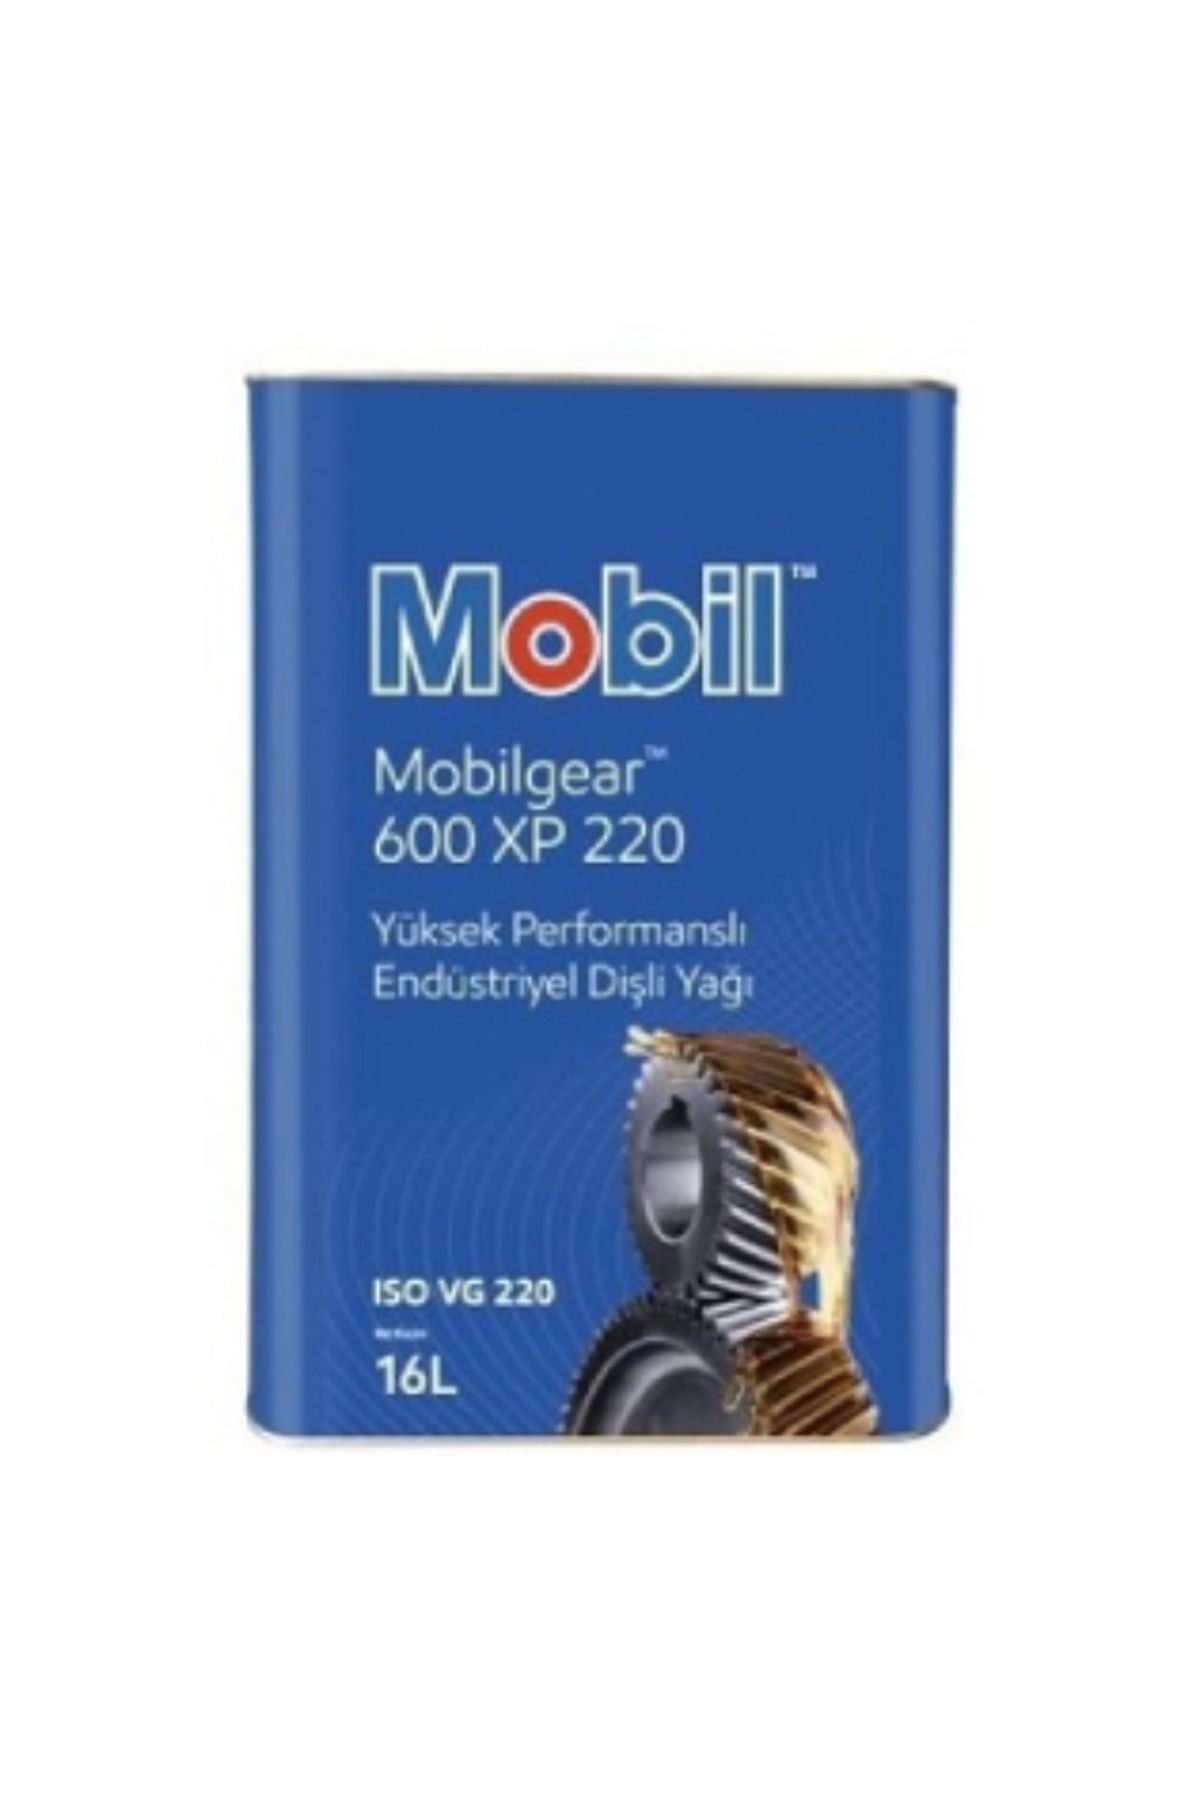 Mobil MobilGear 600 XP 220 - 16 Litre Endüstriyel Dişli Yağı